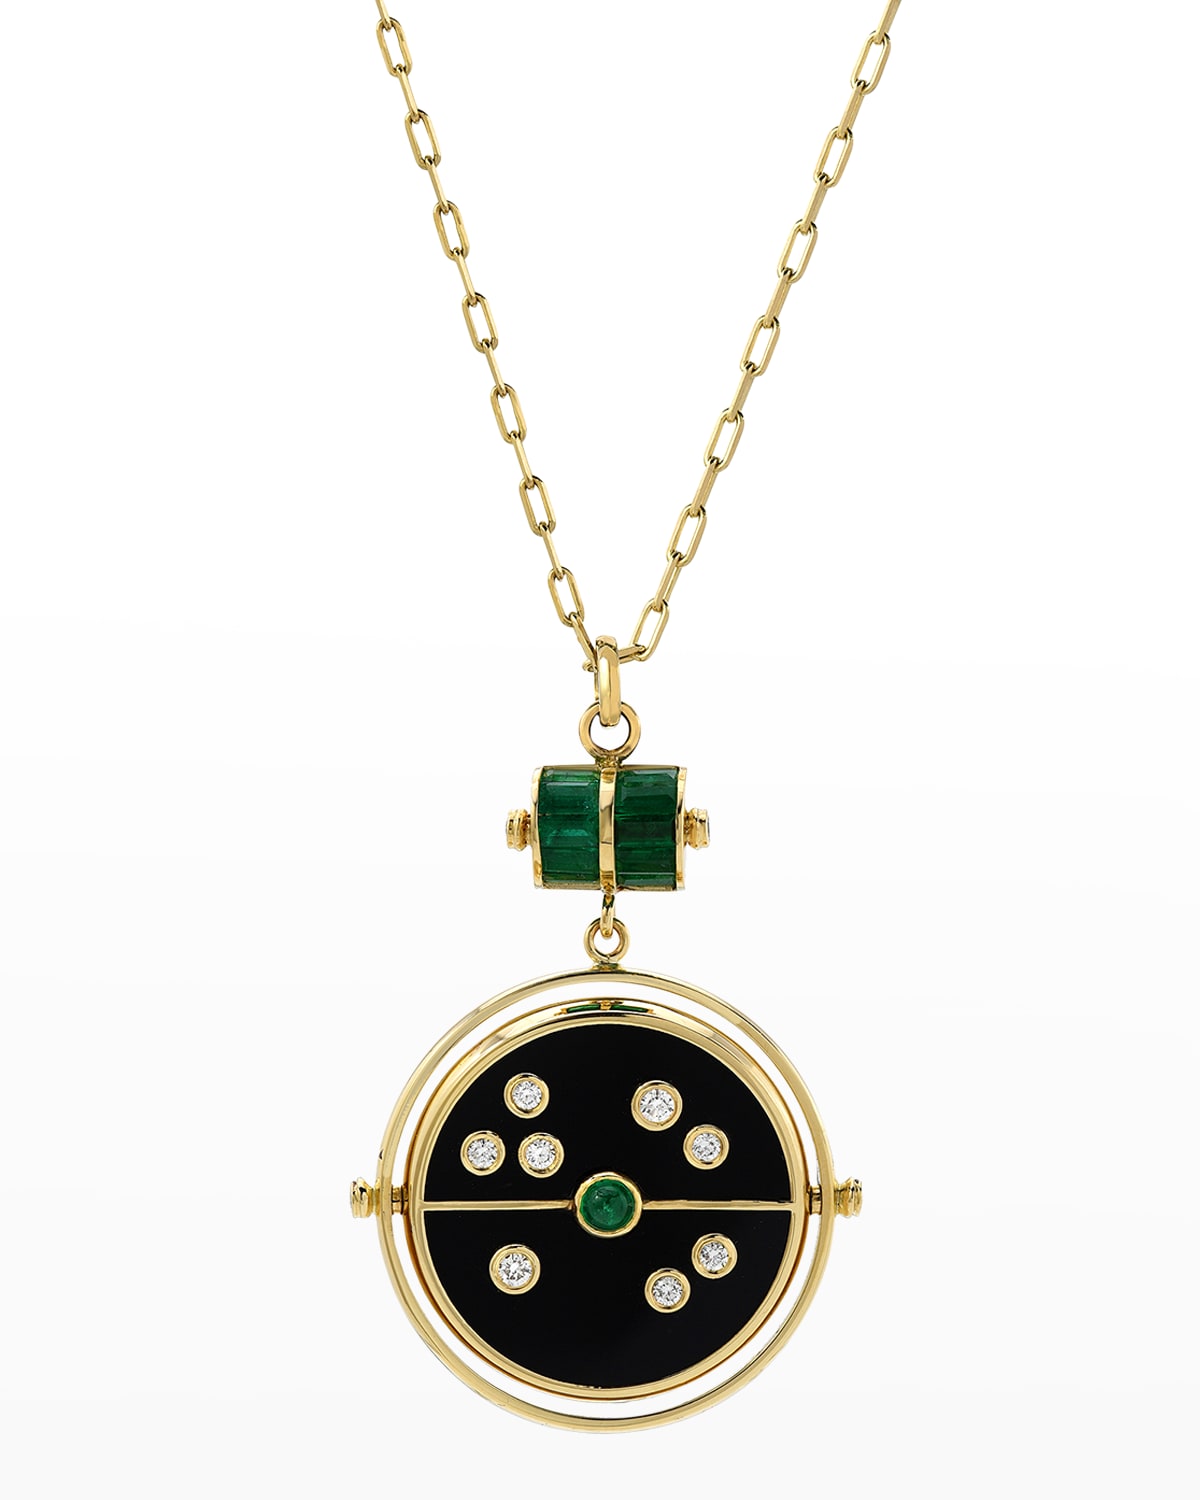 Onyx, Emerald, and Diamond Grandfather Compass Pendant